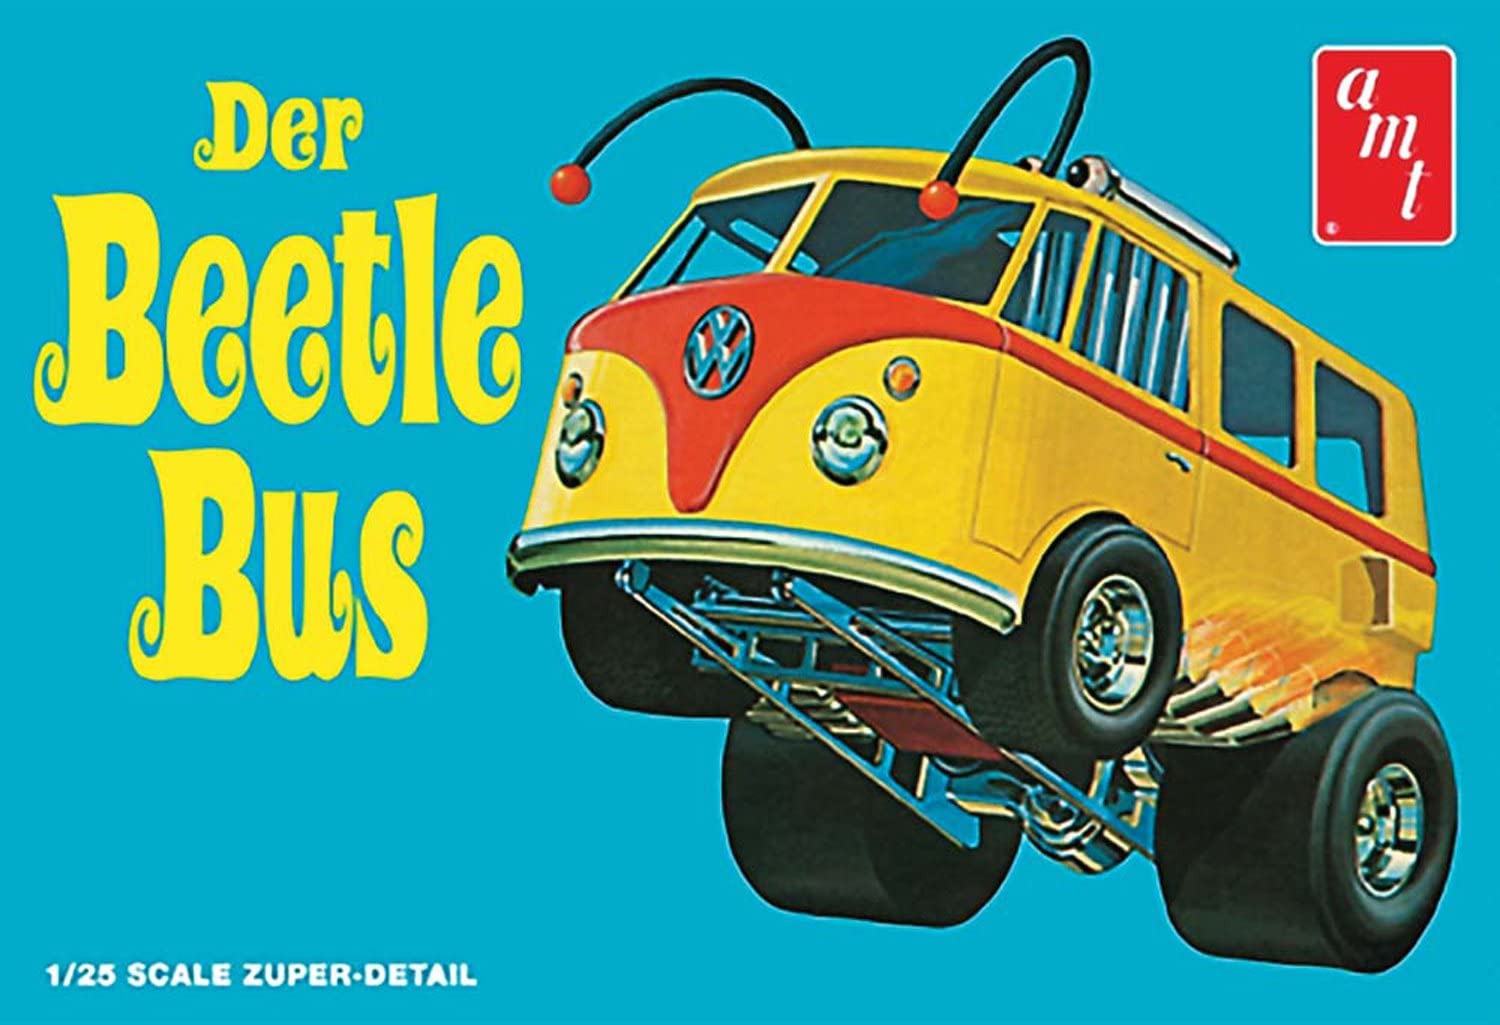 1/25 Der Beetle Bus Plastic Model Kit